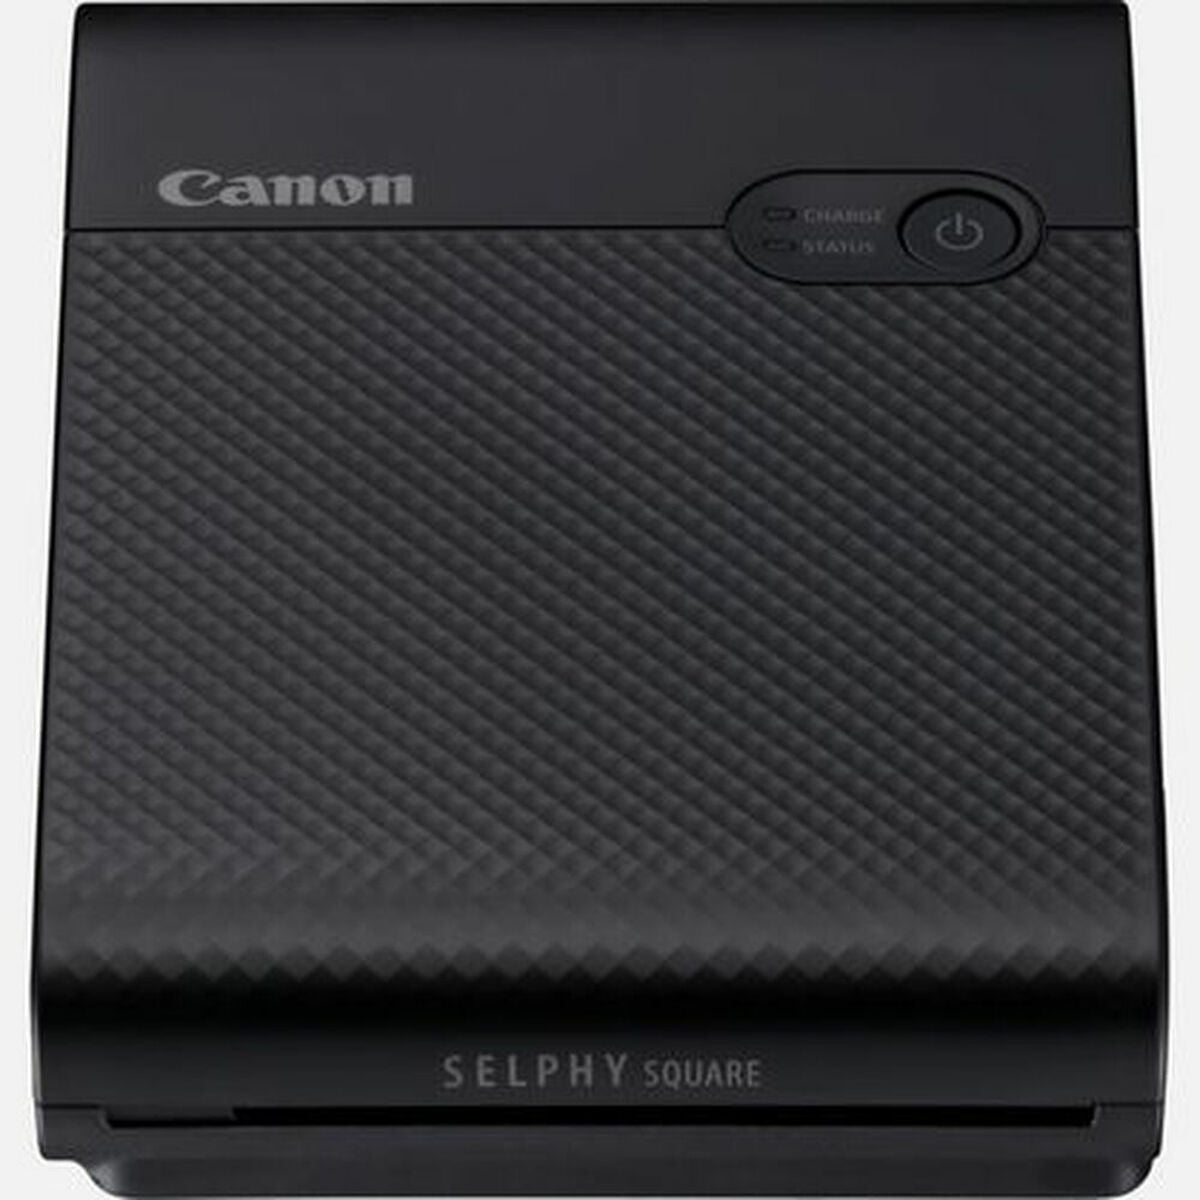 Multifunction Printer Canon 4107C003 Bluetooth Black